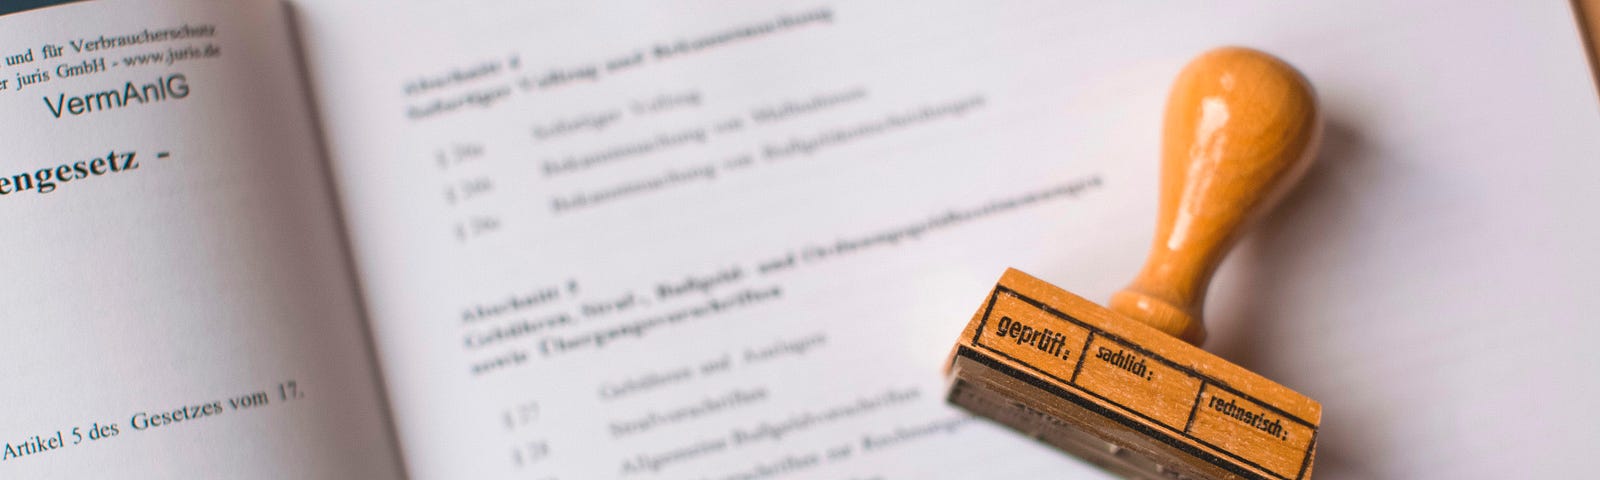 legal documents in German